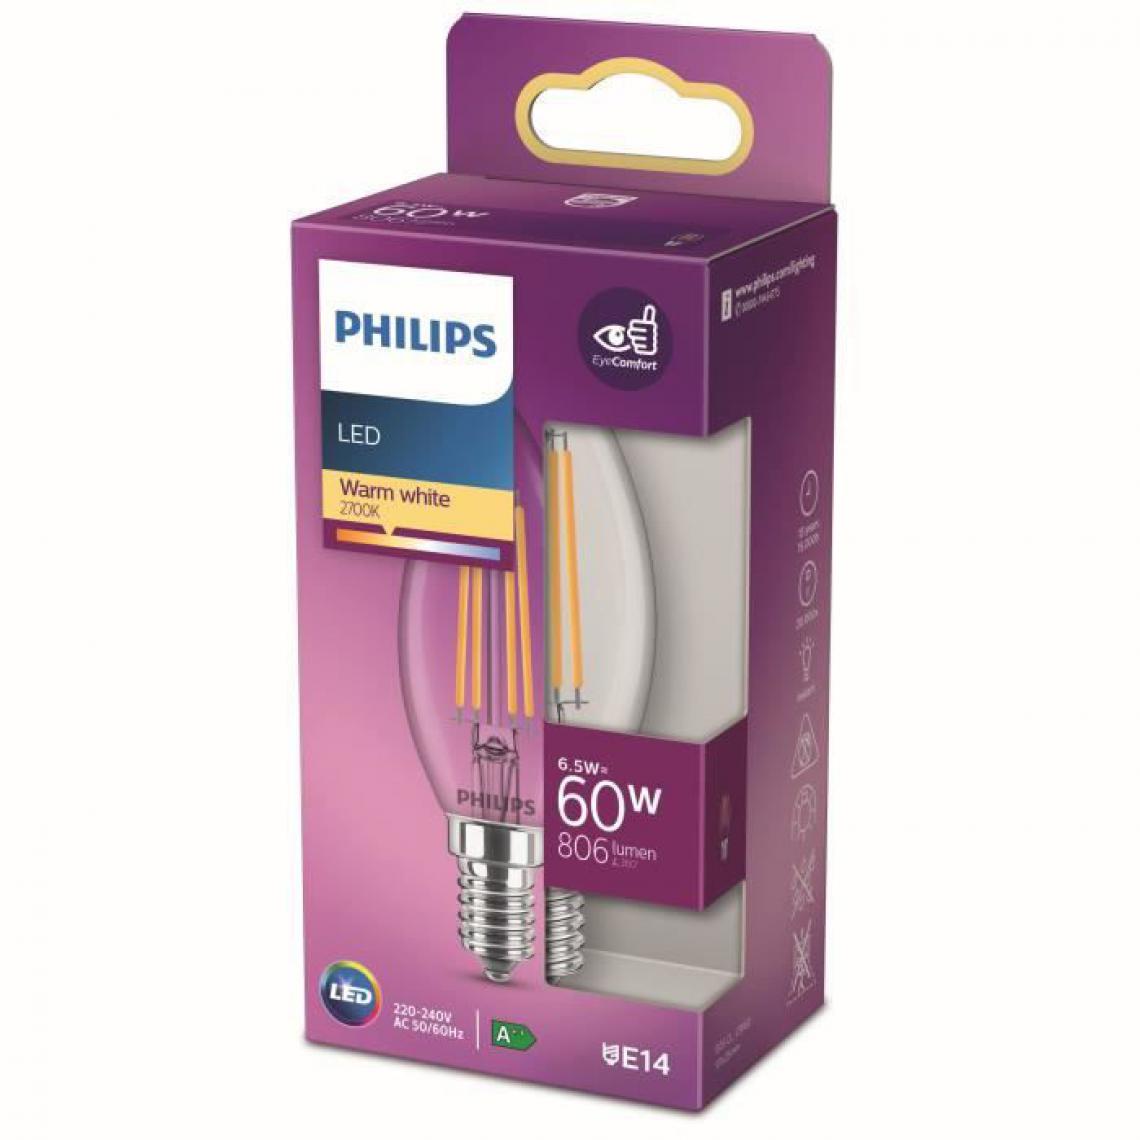 Philips - Philips ampoule LED Equivalent 60W E14 Blanc chaud Non dimmable, Verre - Ampoules LED